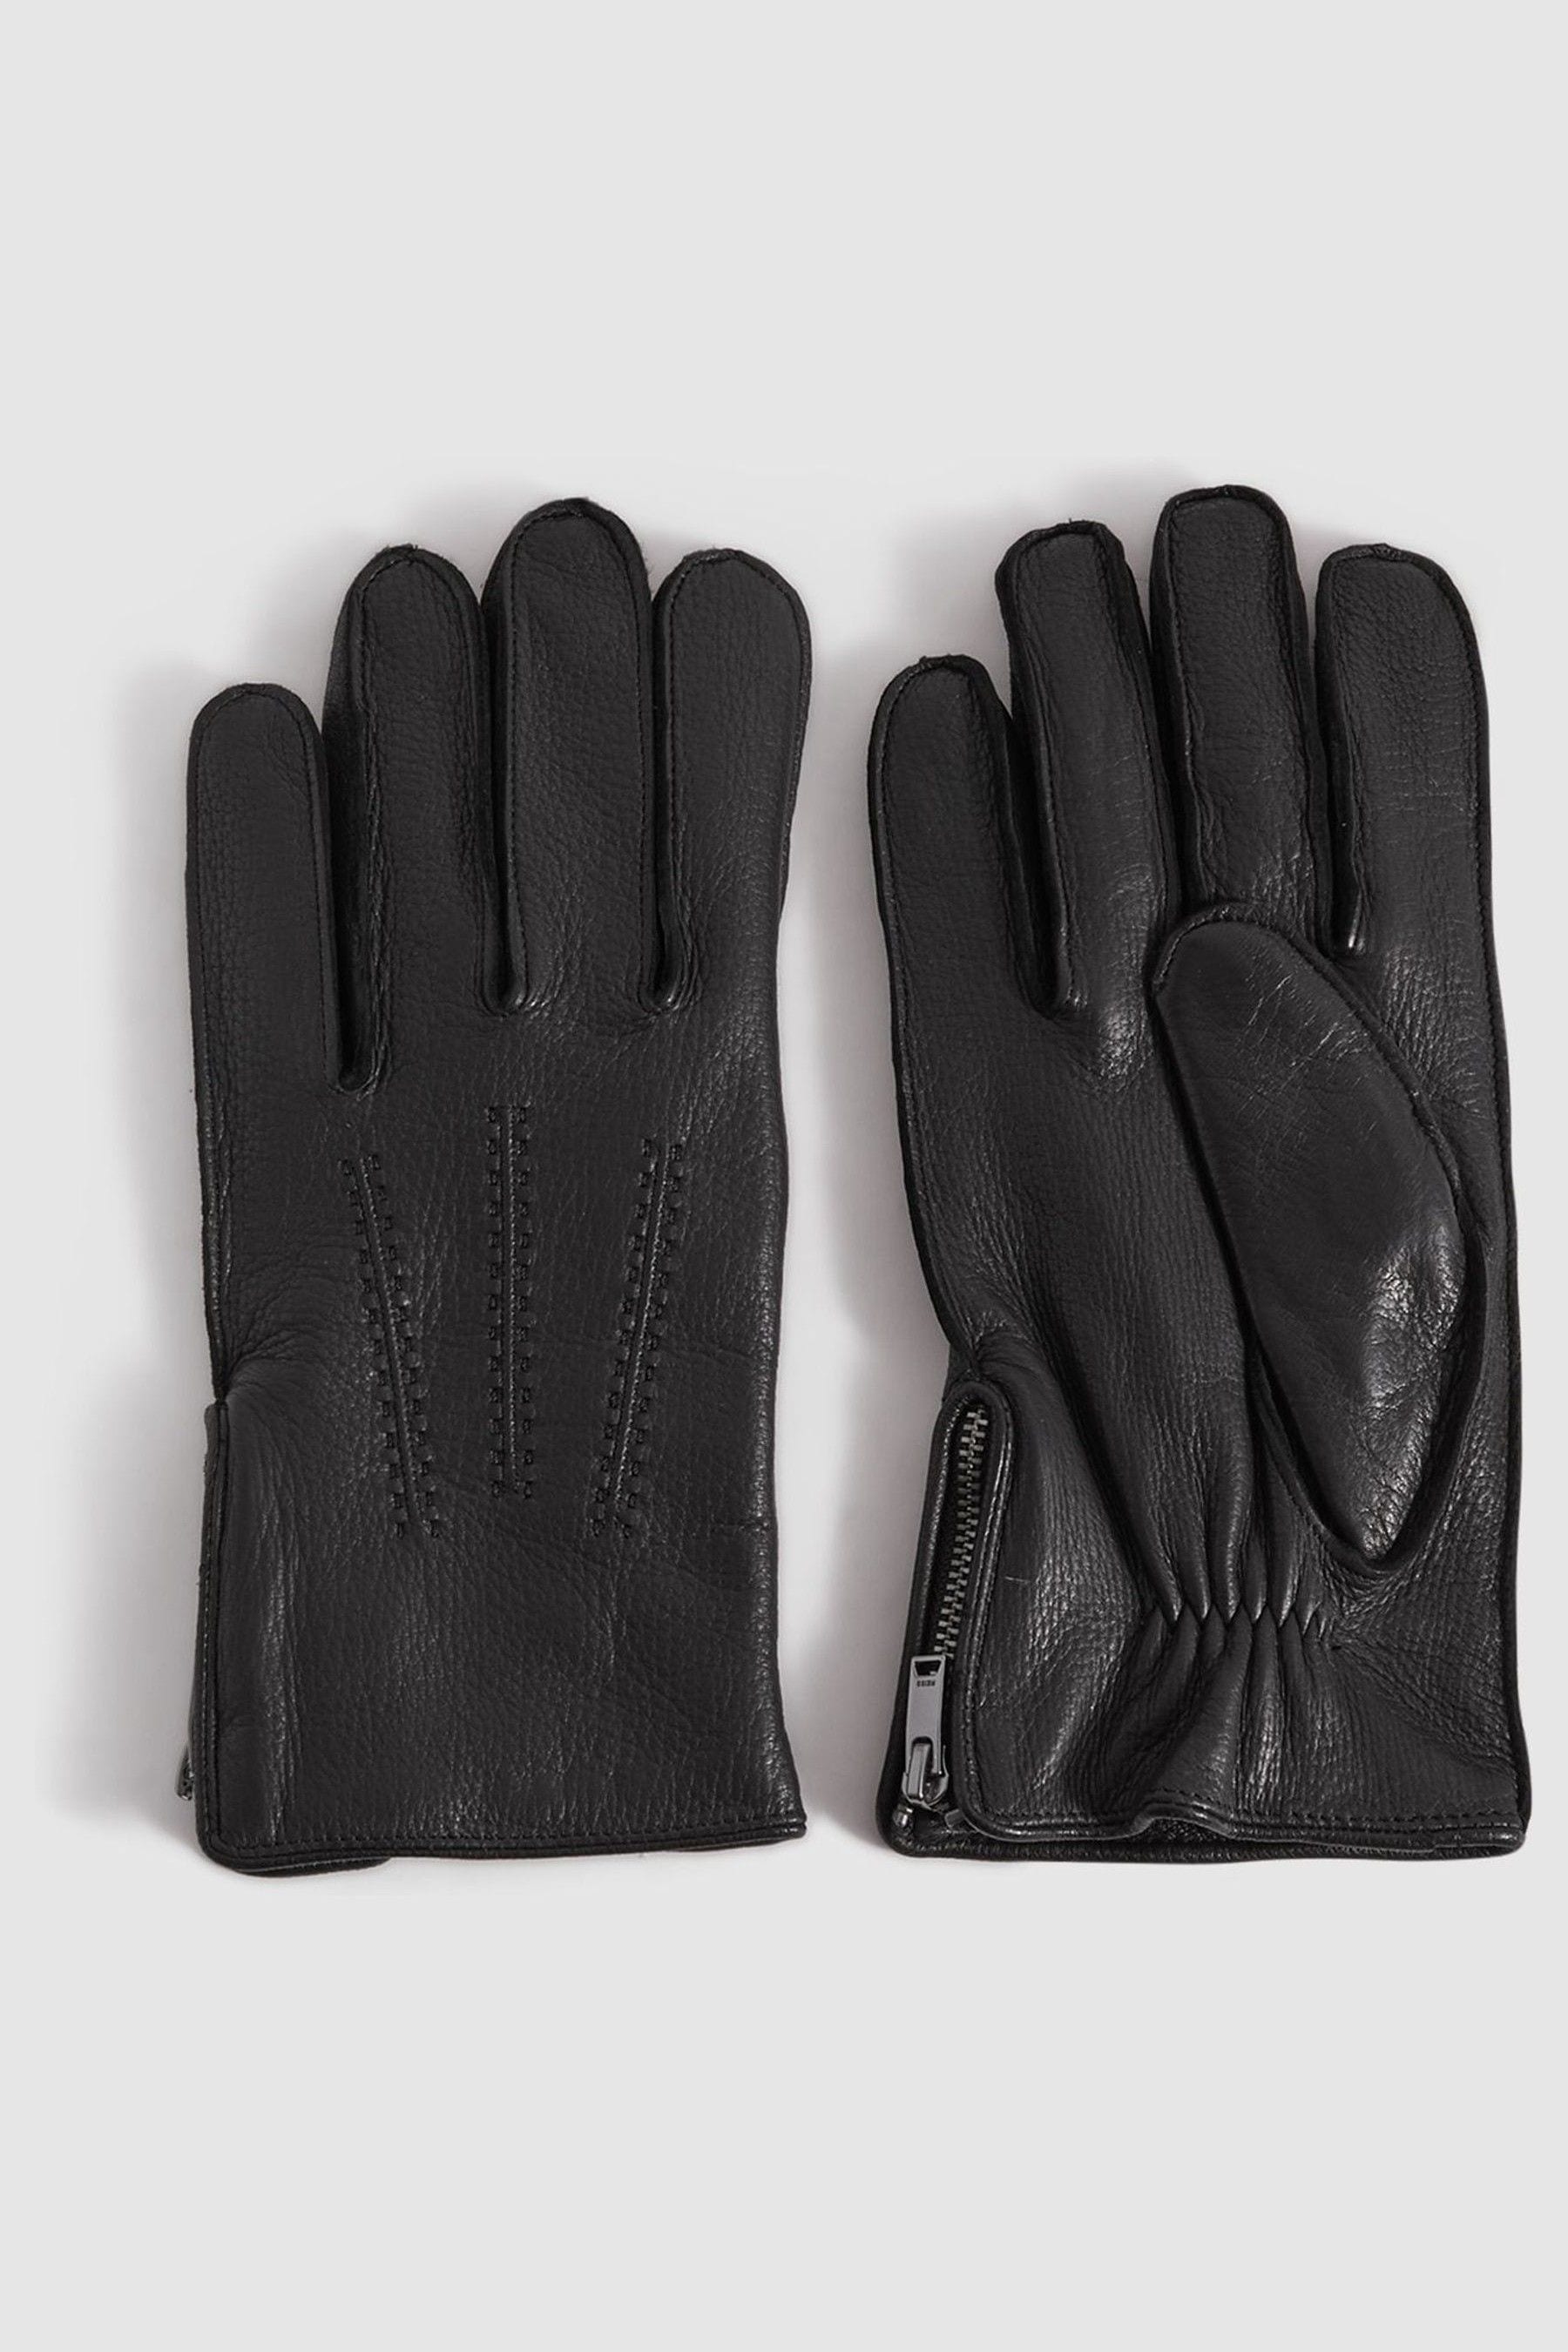 Reiss Iowa - Black Leather Gloves, S